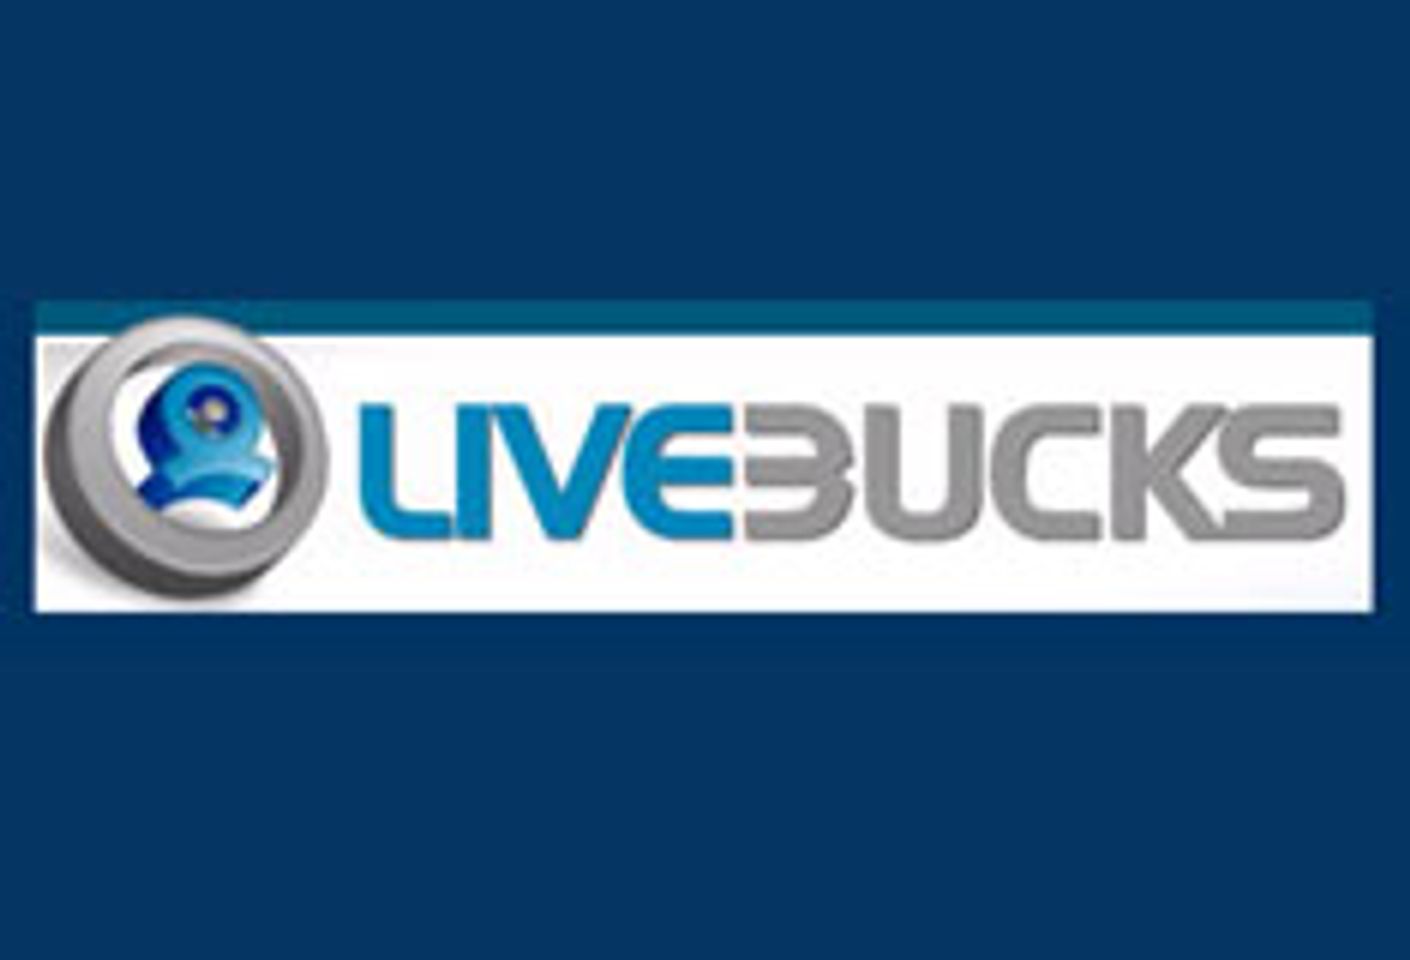 LiveBucks Offers ePassporte